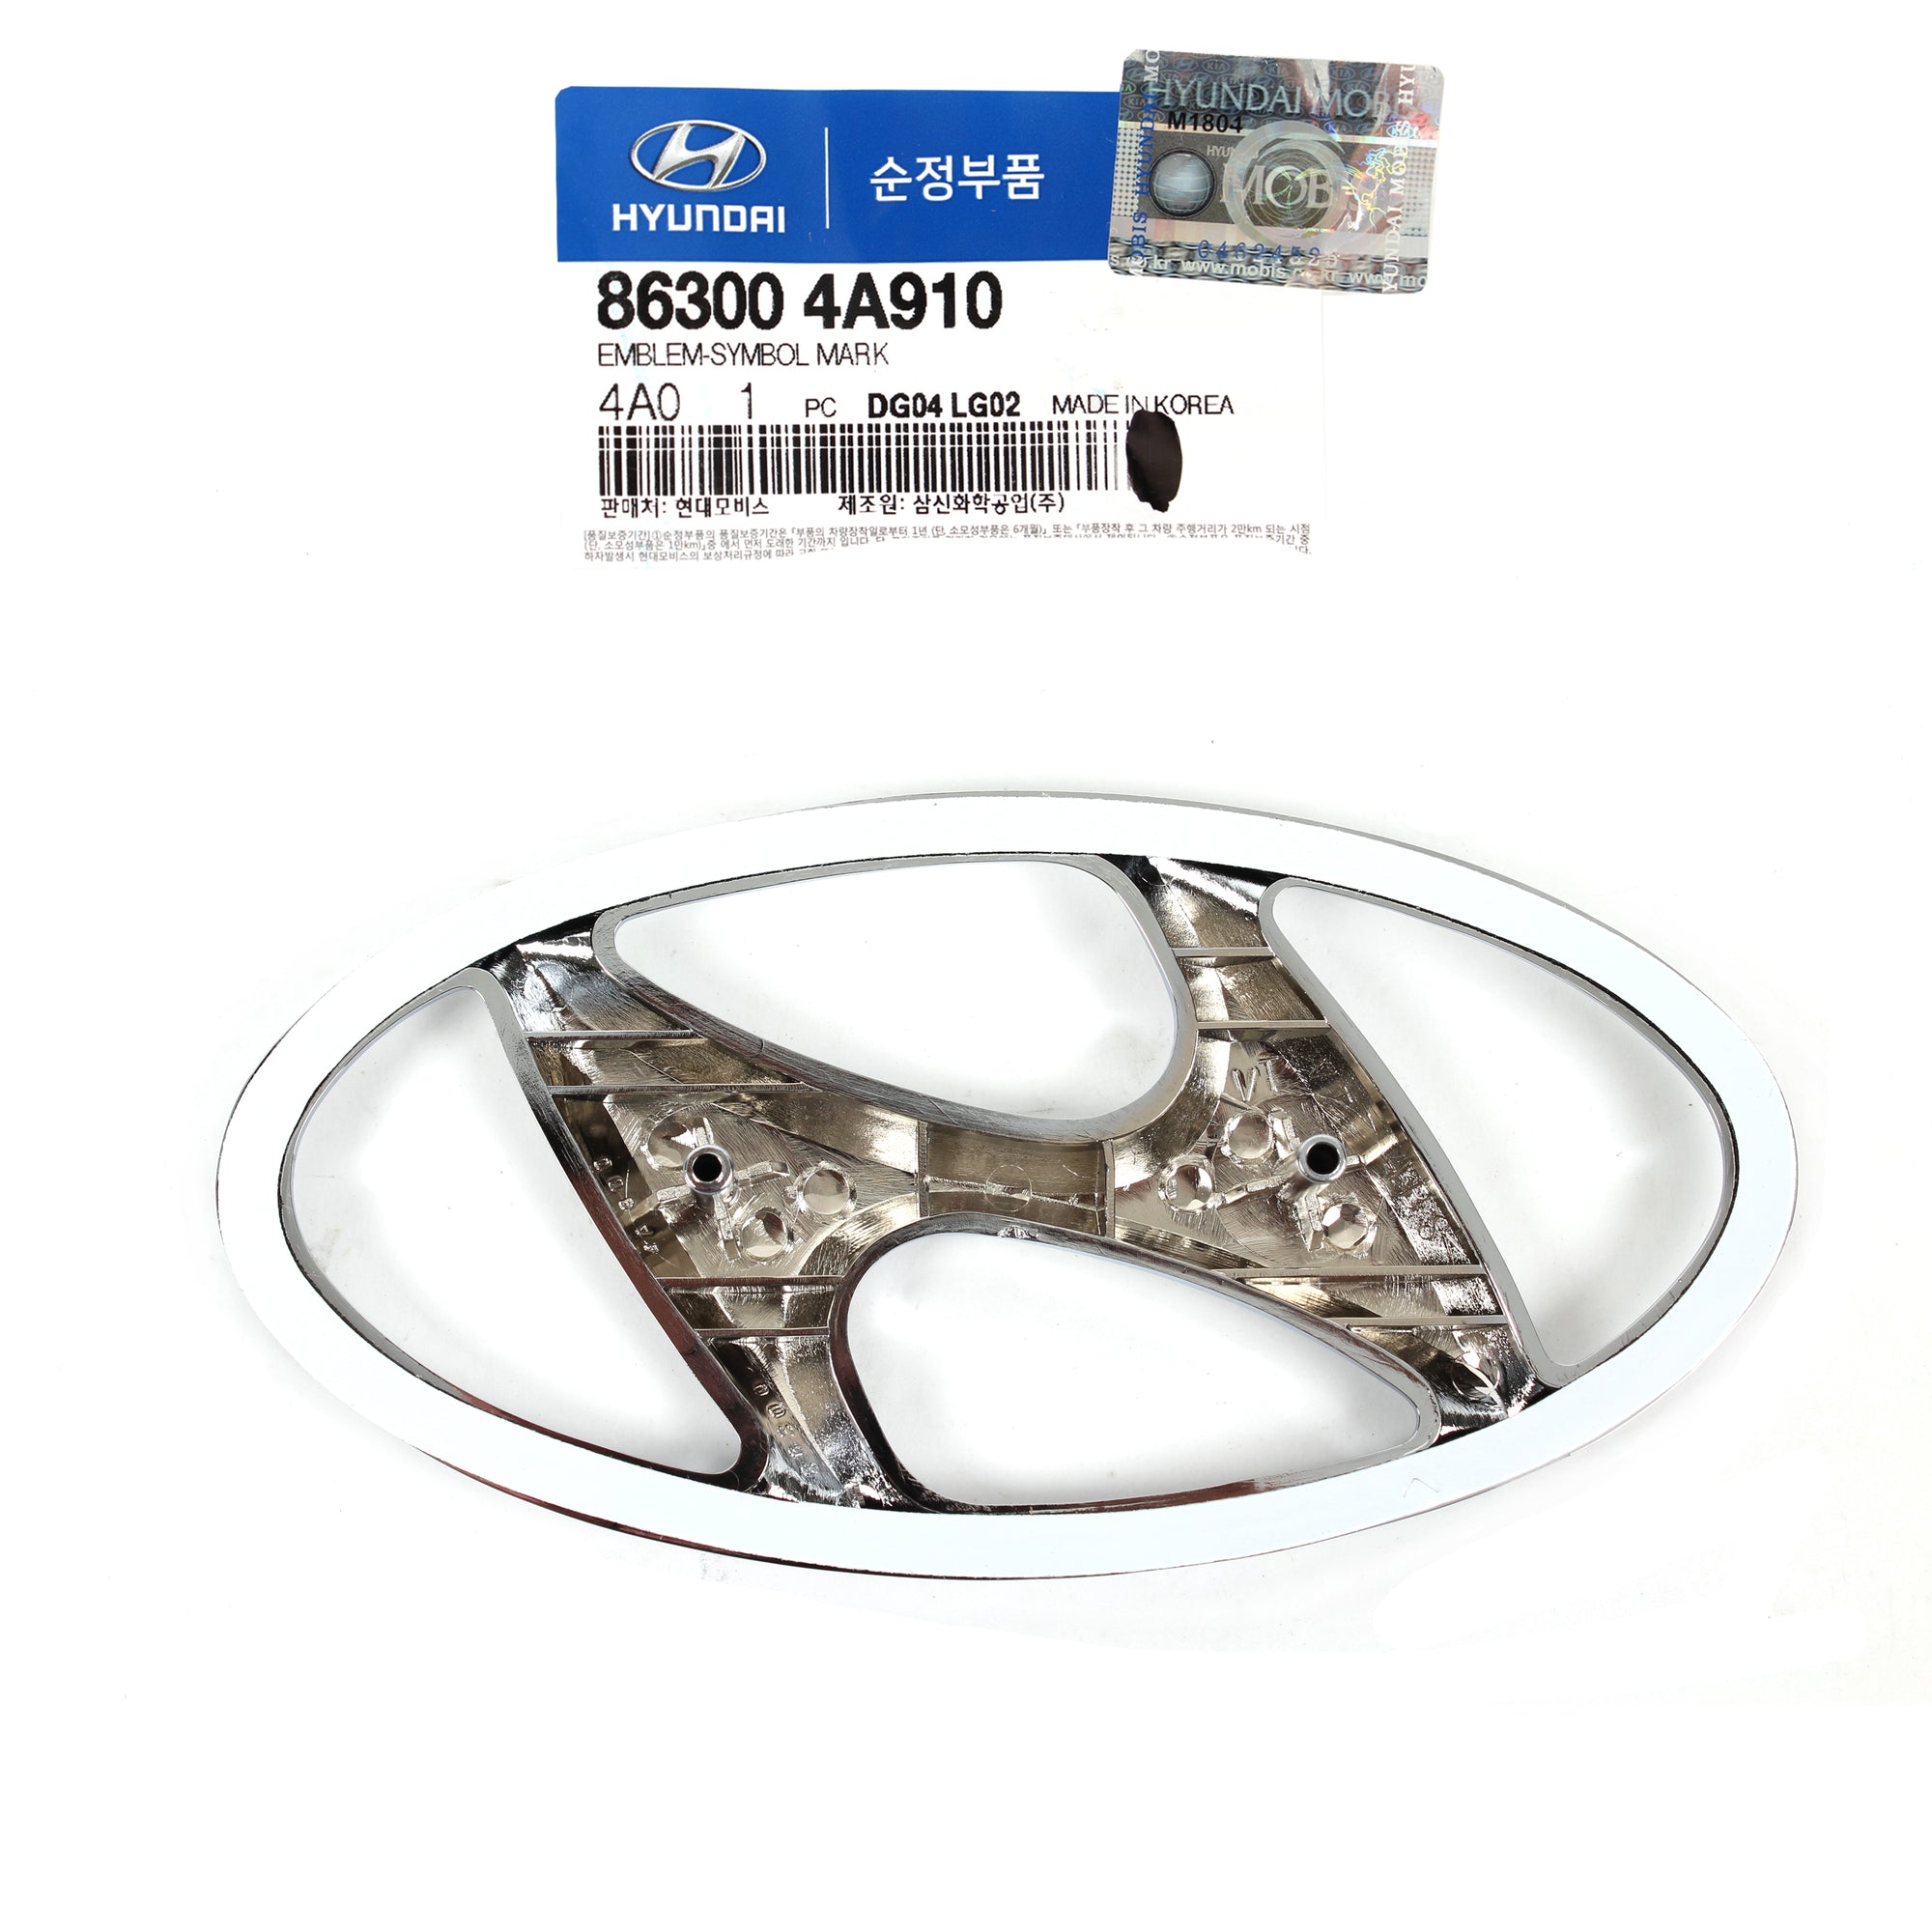 GENUINE Emblem FRONT for 07-13 Hyundai Entourage Santa Fe Sonata 863004A910